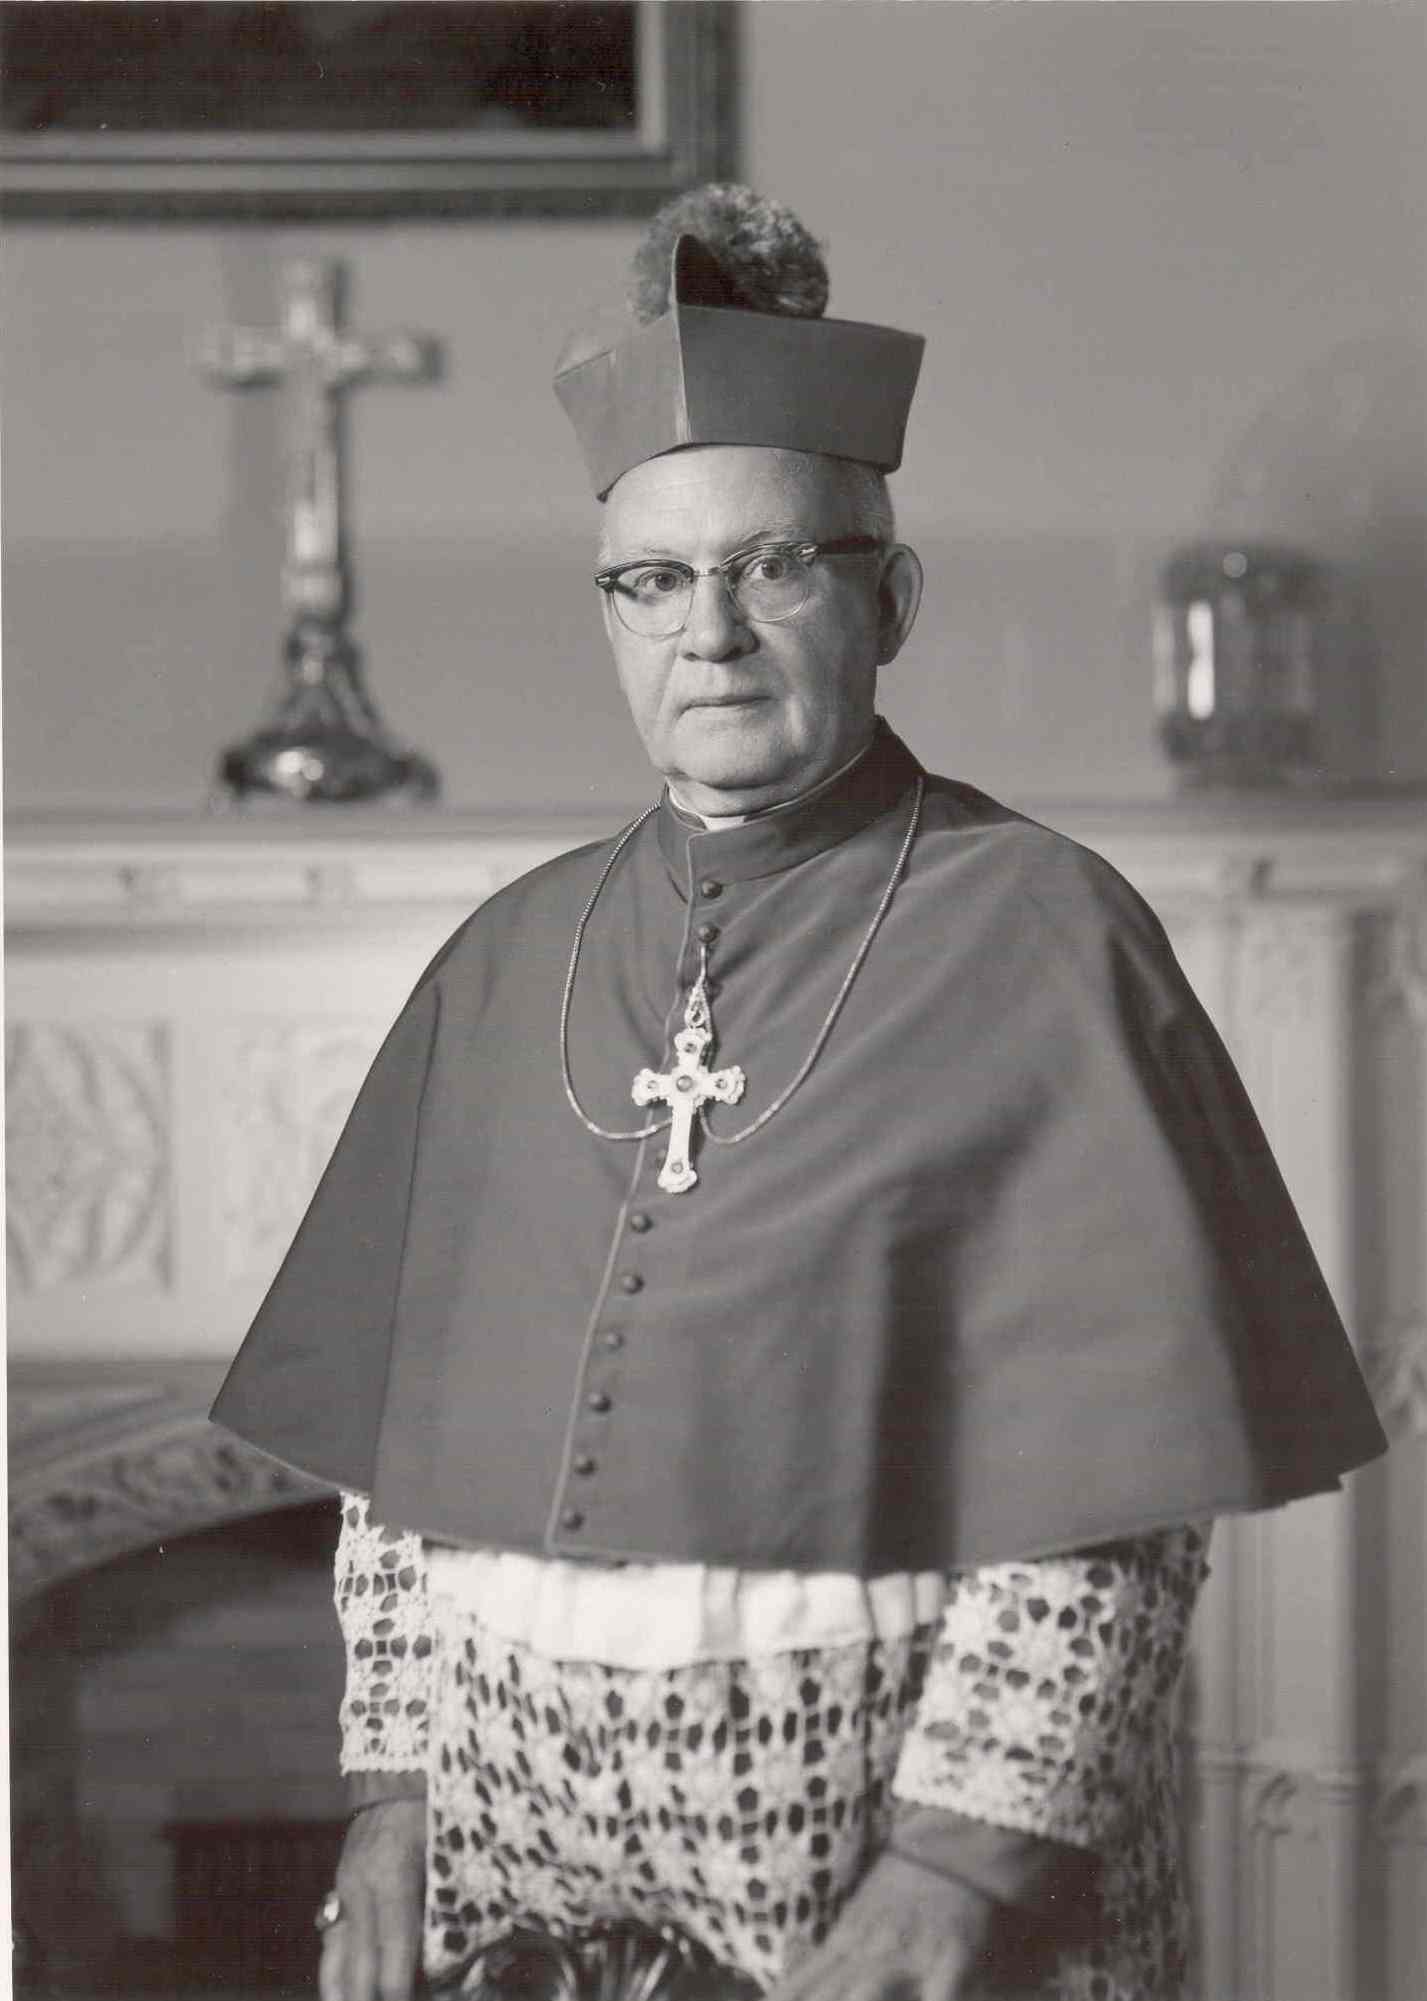 Photograph of Bishop Joseph F. Ryan